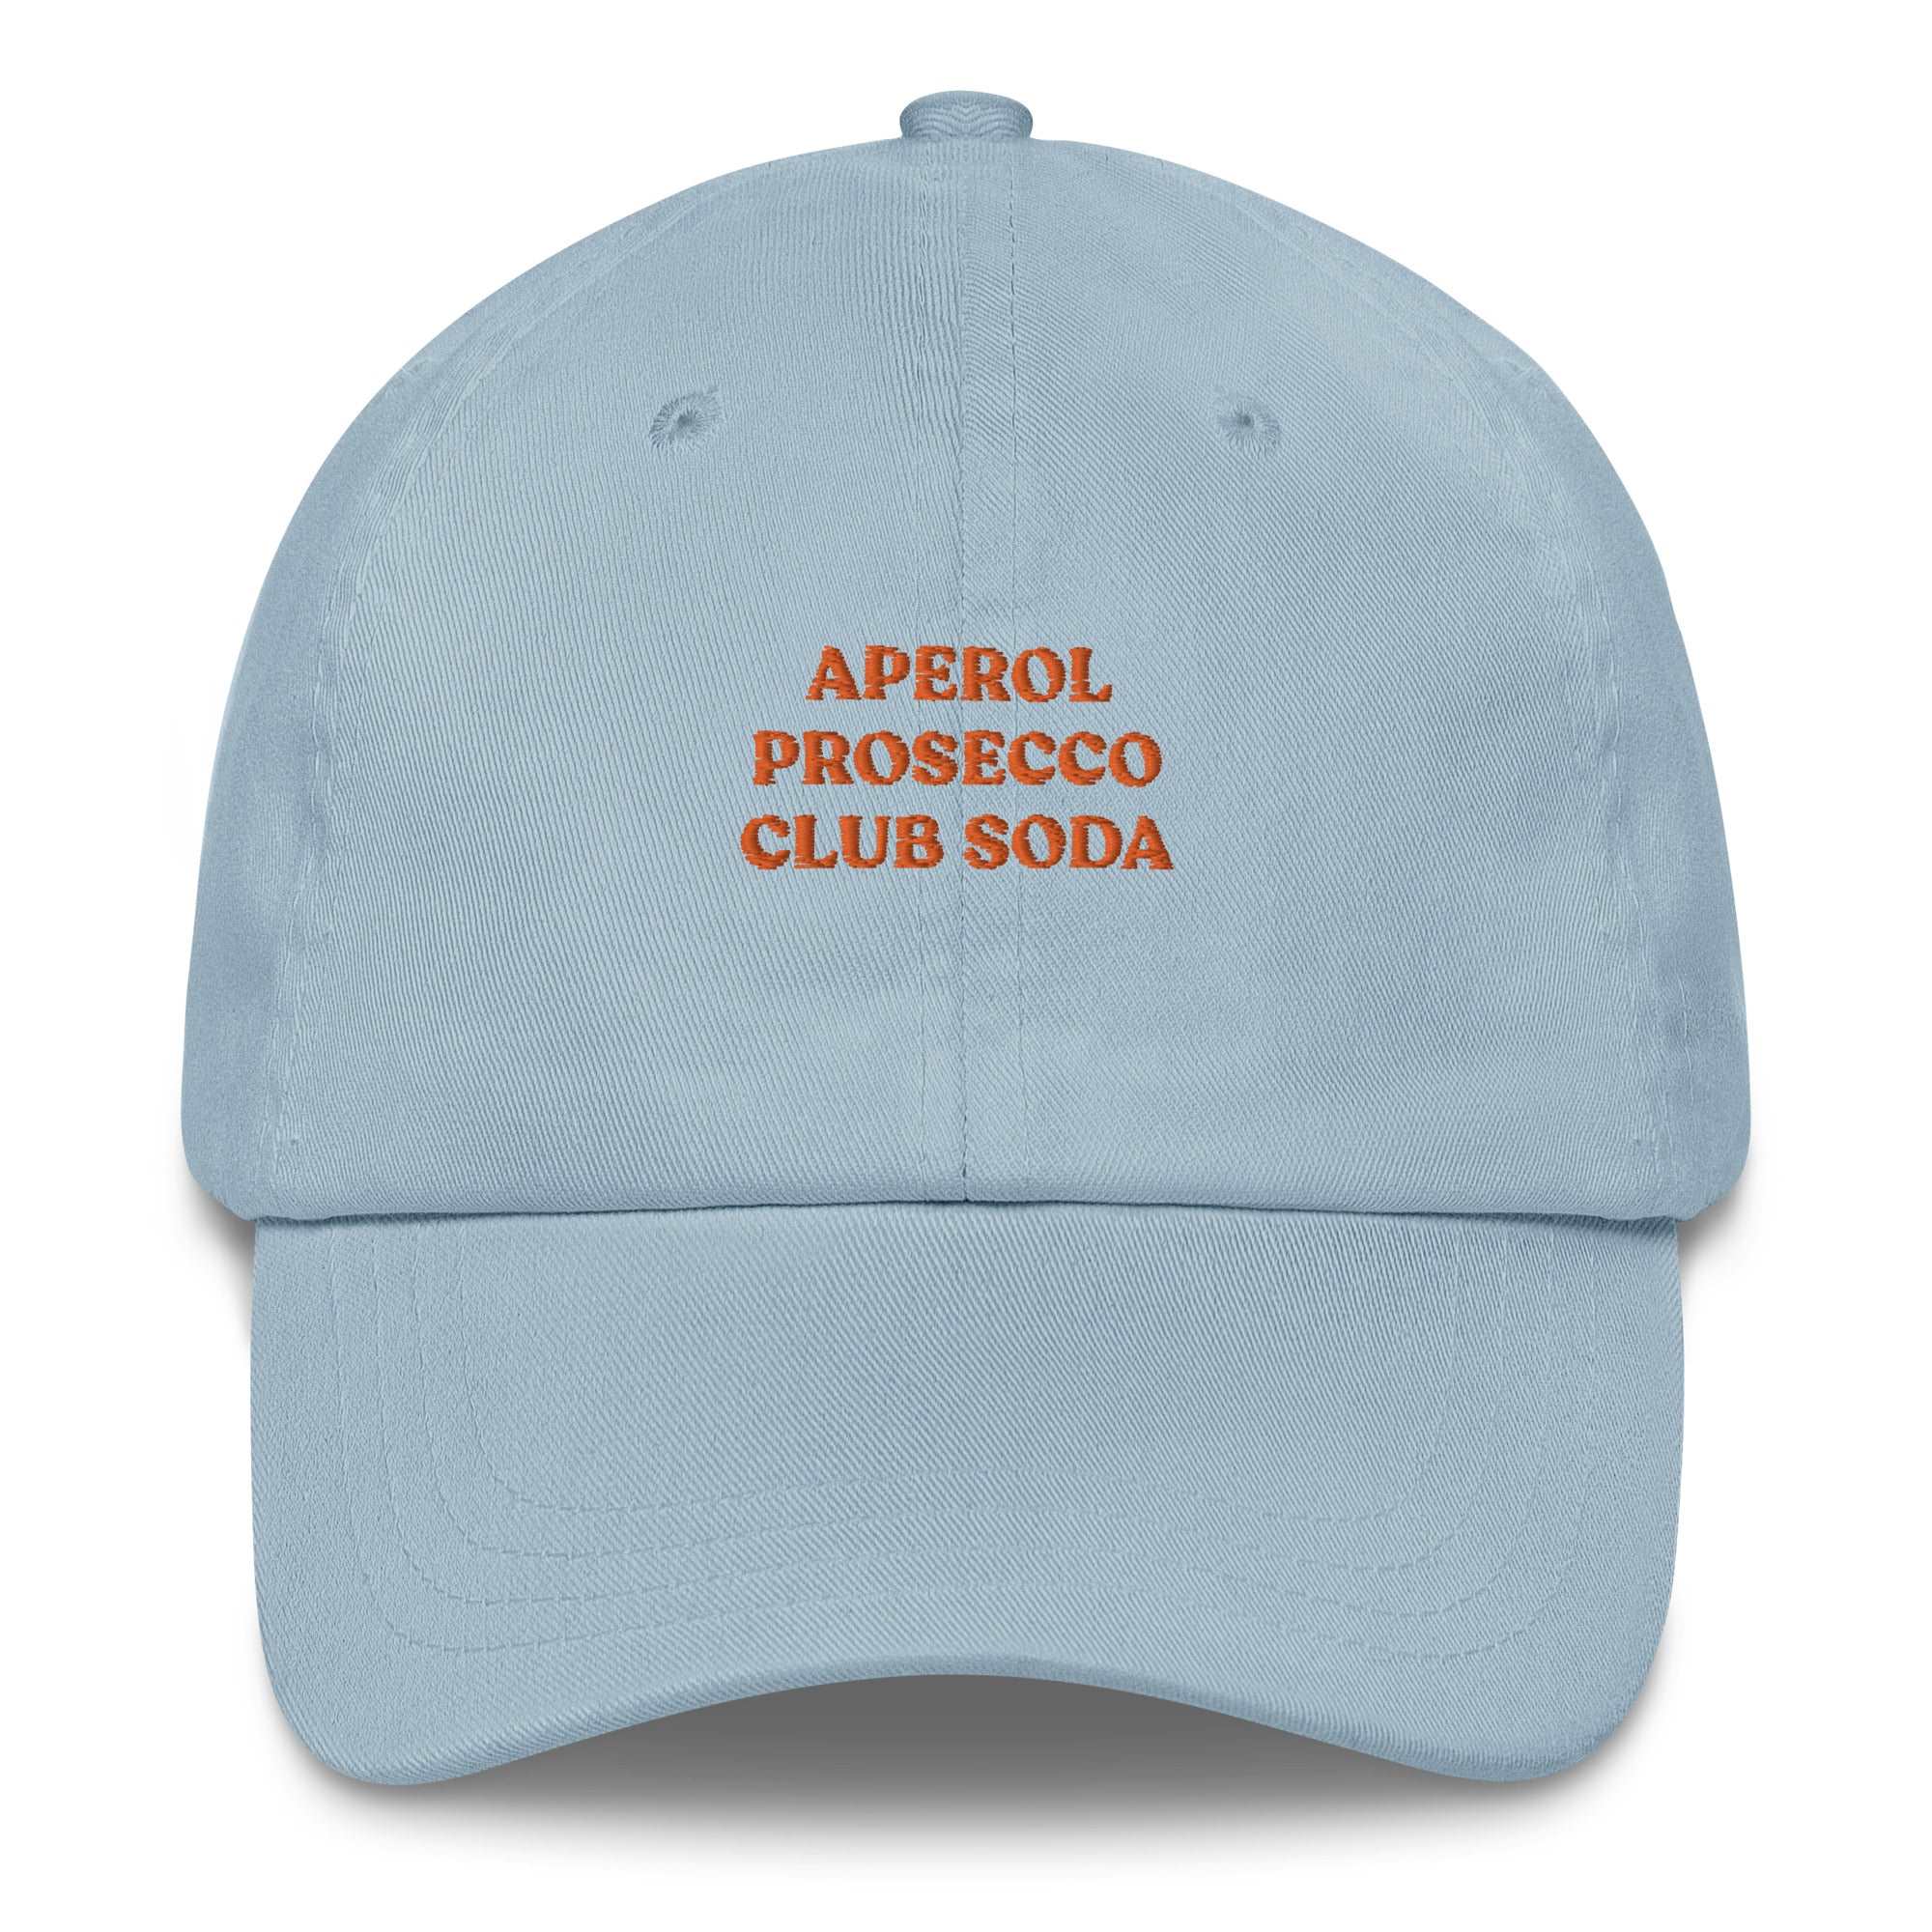 Aperol Prosecco Club Soda - Cap